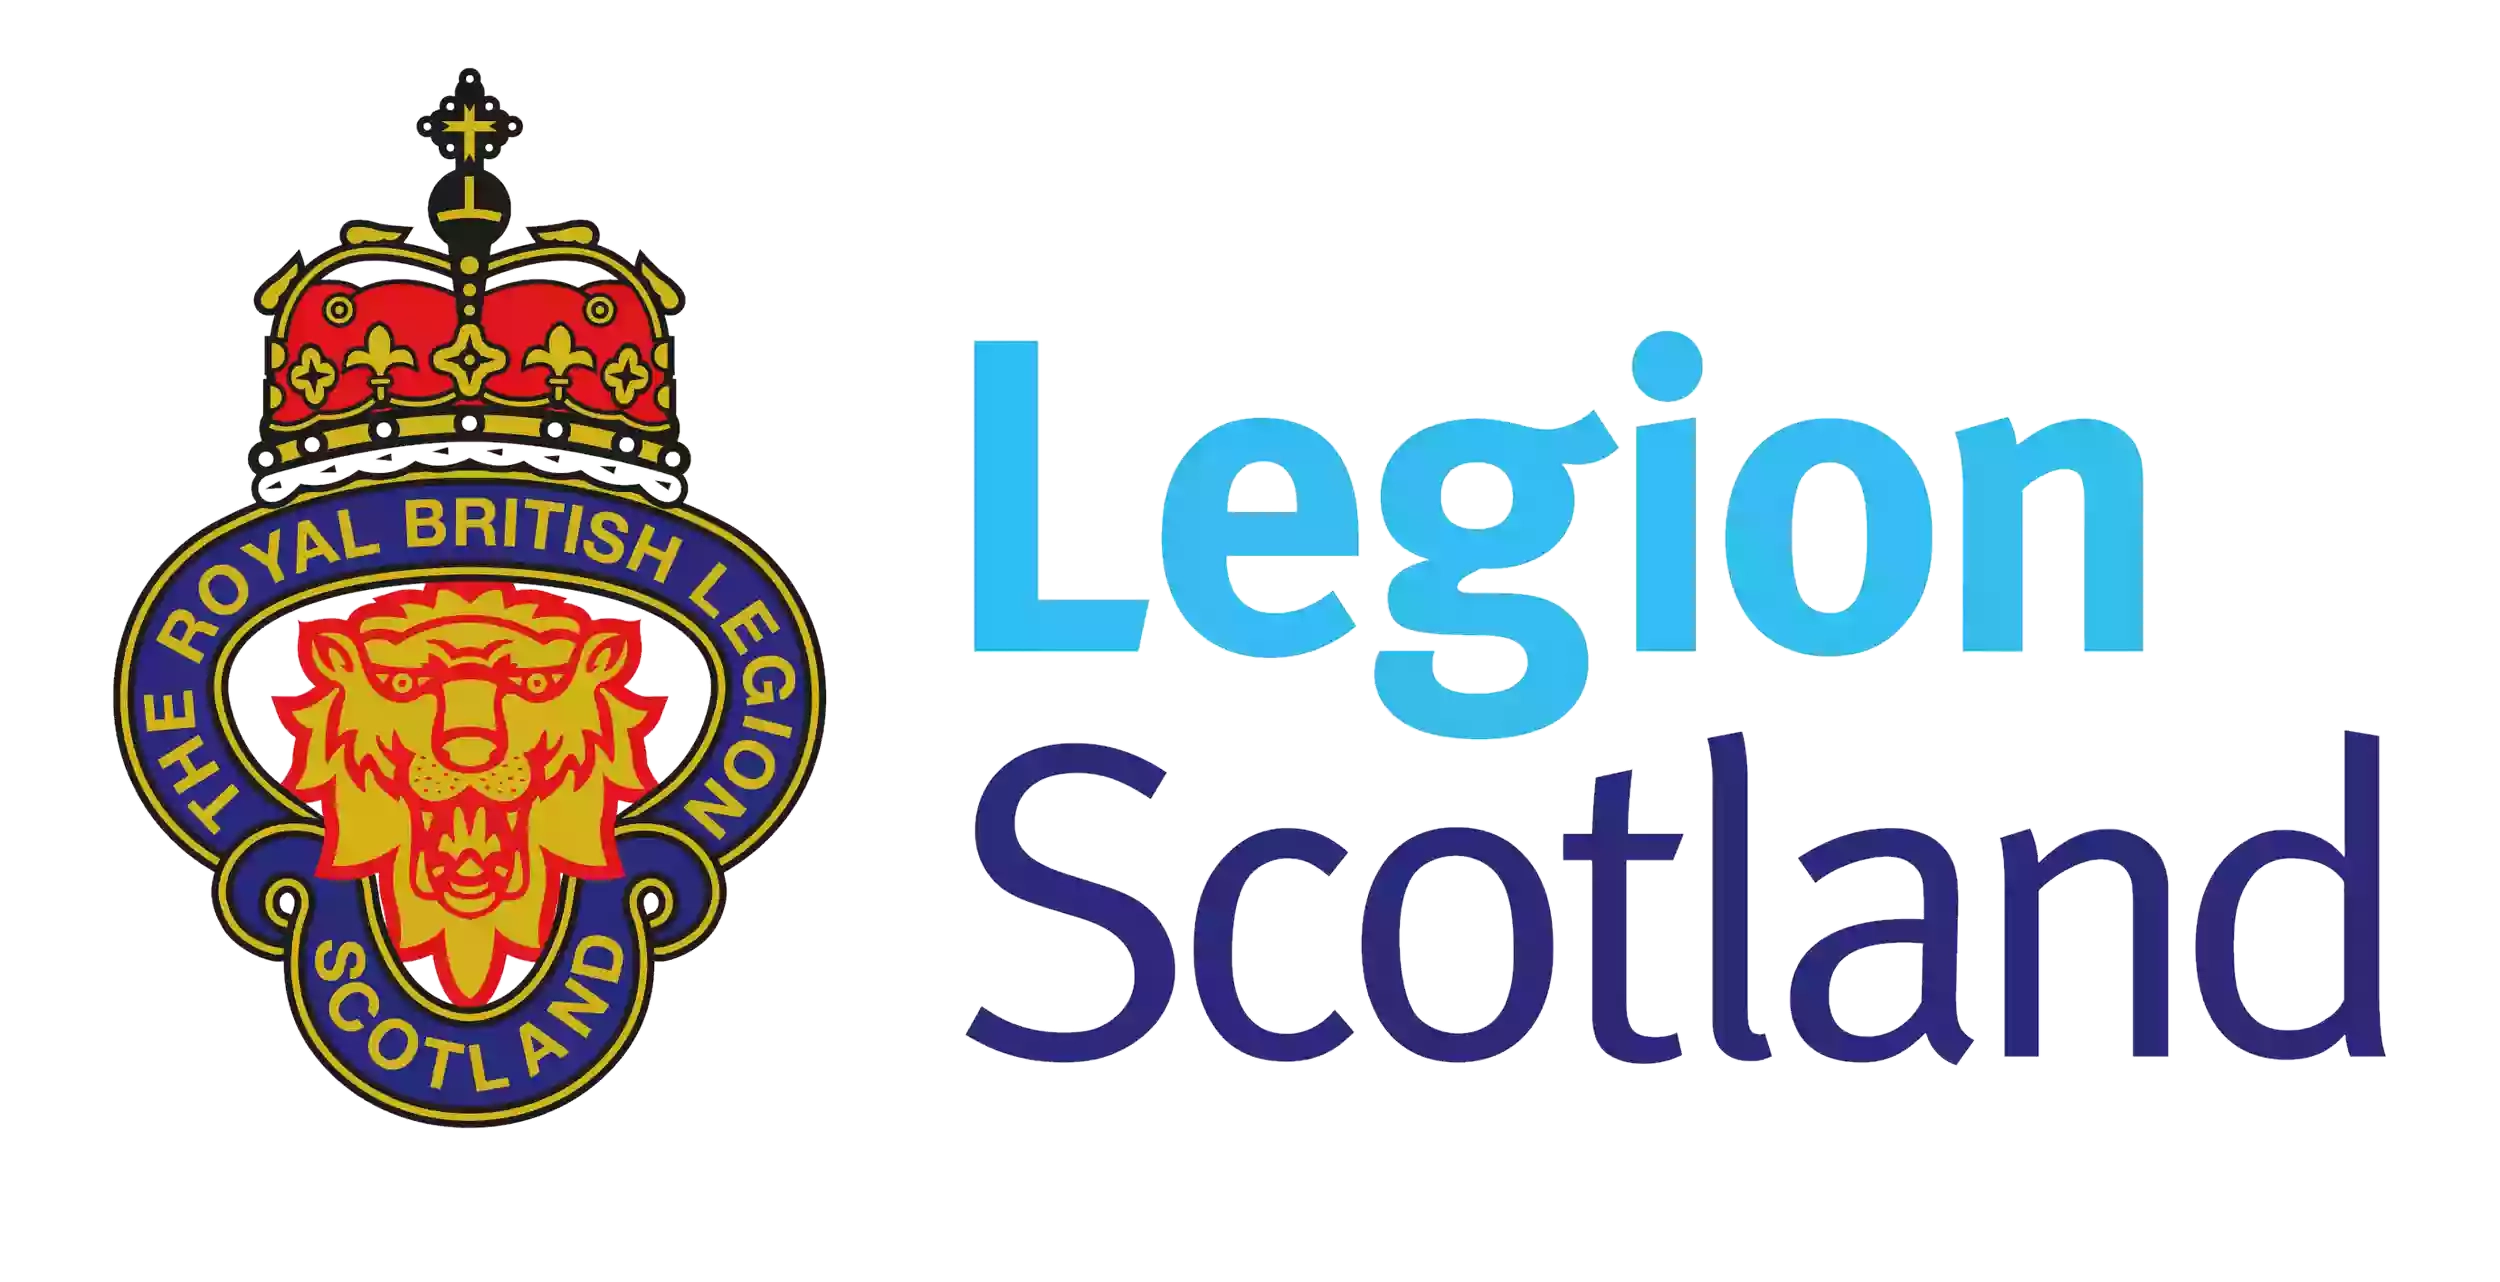 The Ellon Royal British Legion (Scotland)